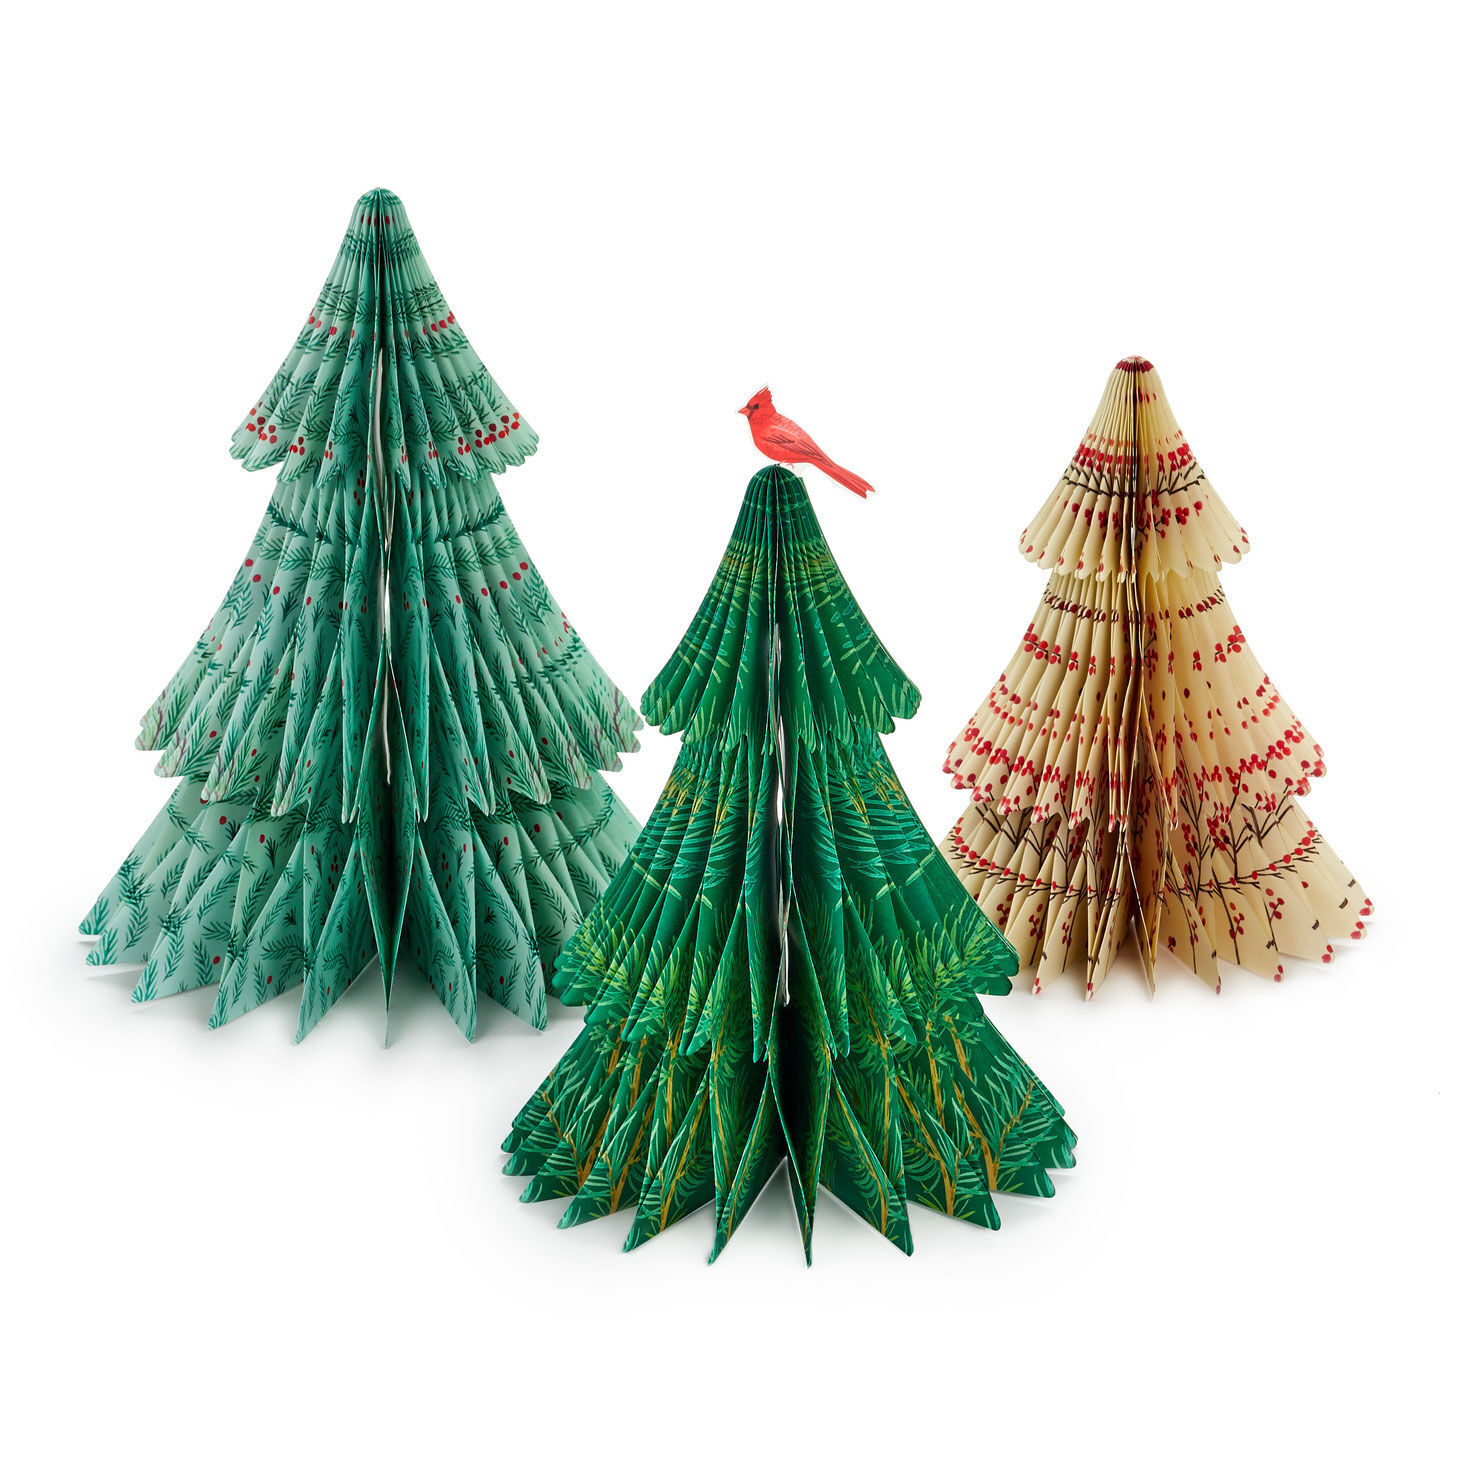 Honeycomb Trees 3D Pop-Up Christmas Decorations, Set of 3 ...